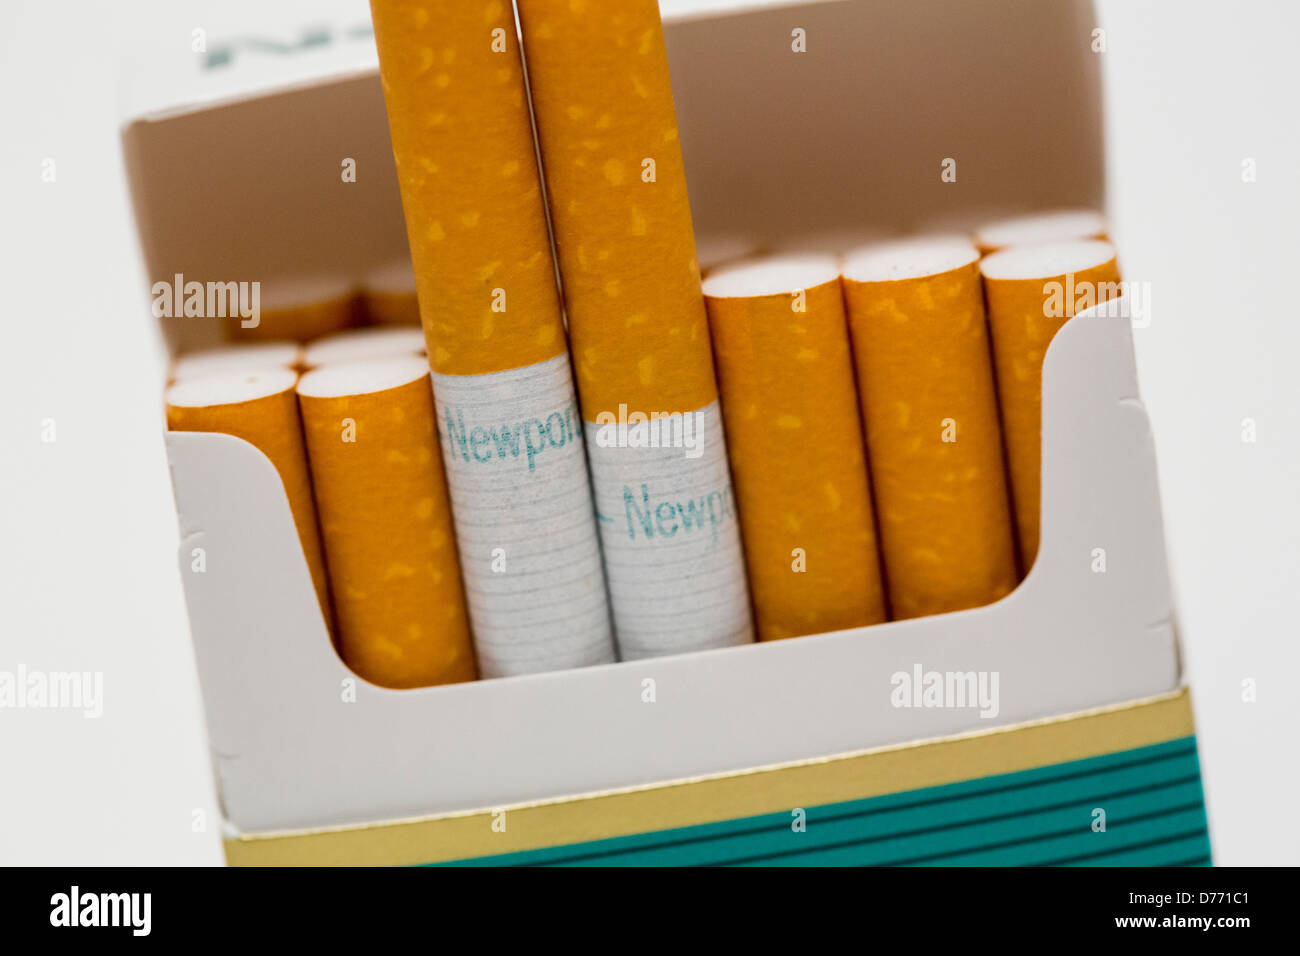 Eine Packung Zigaretten Newport. Stockfoto